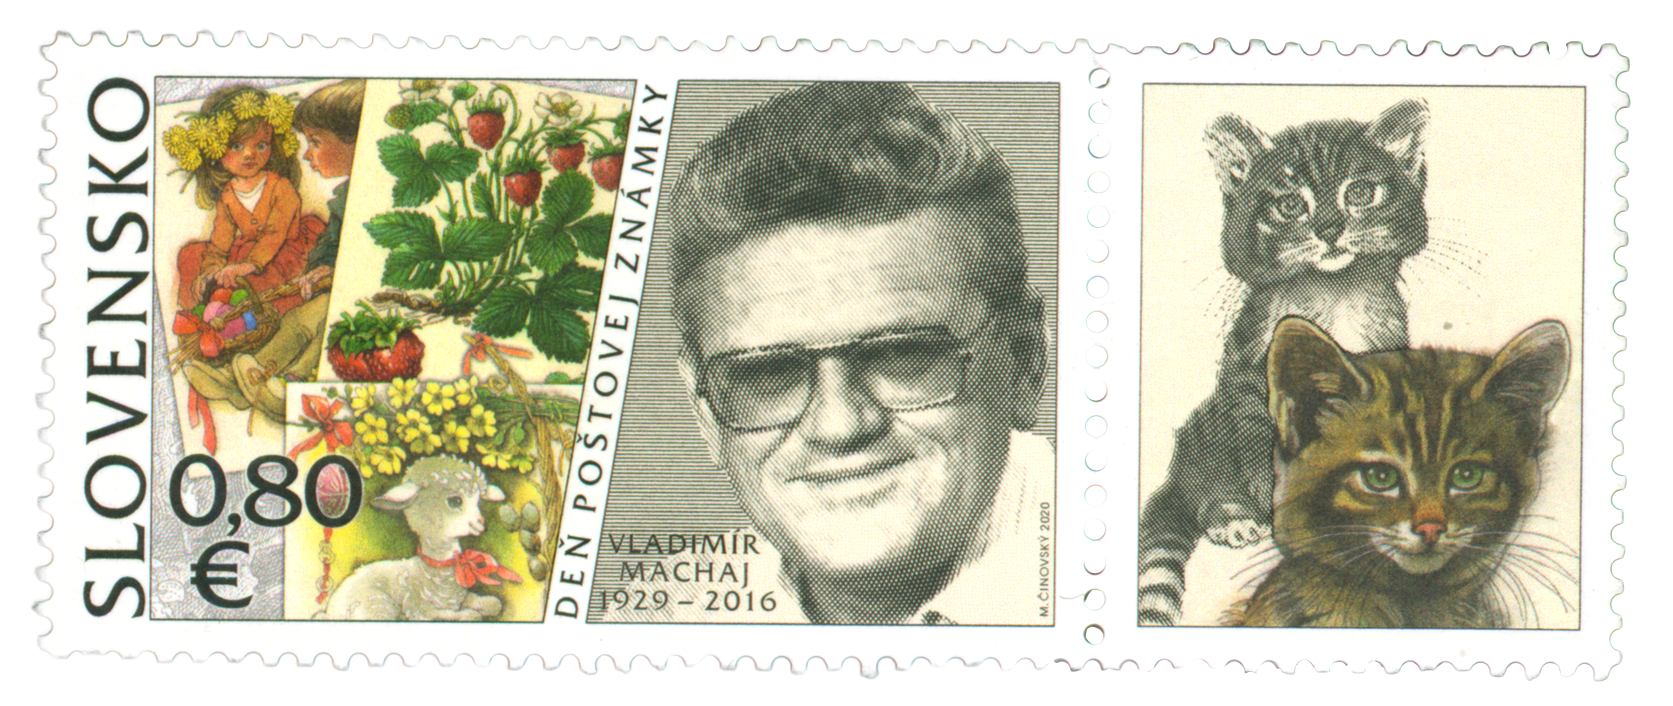 729 - Postage Stamp Day: Vladimír Machaj (1929 – 2016) 